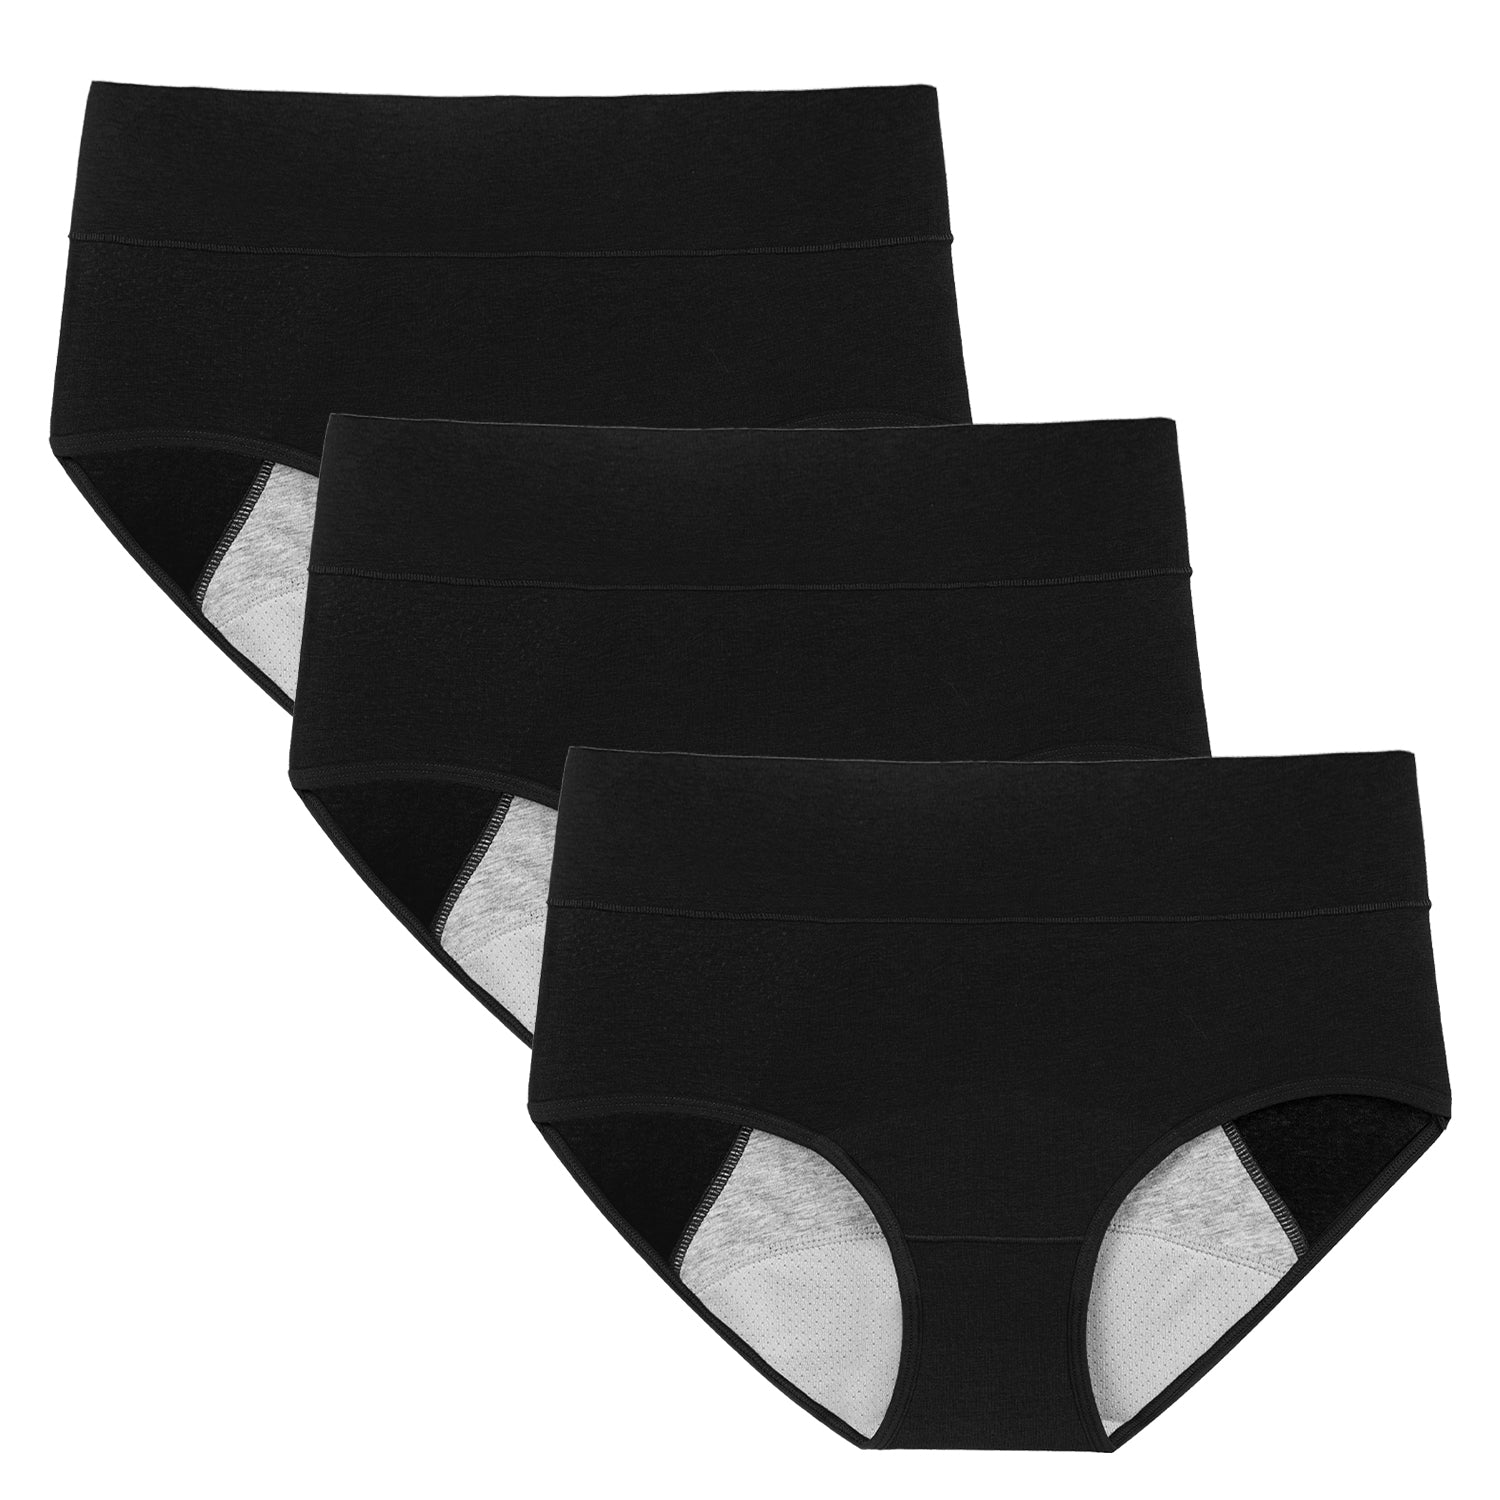 POKARLA Seamless Thongs for Women No Show Underwear Pack of 10